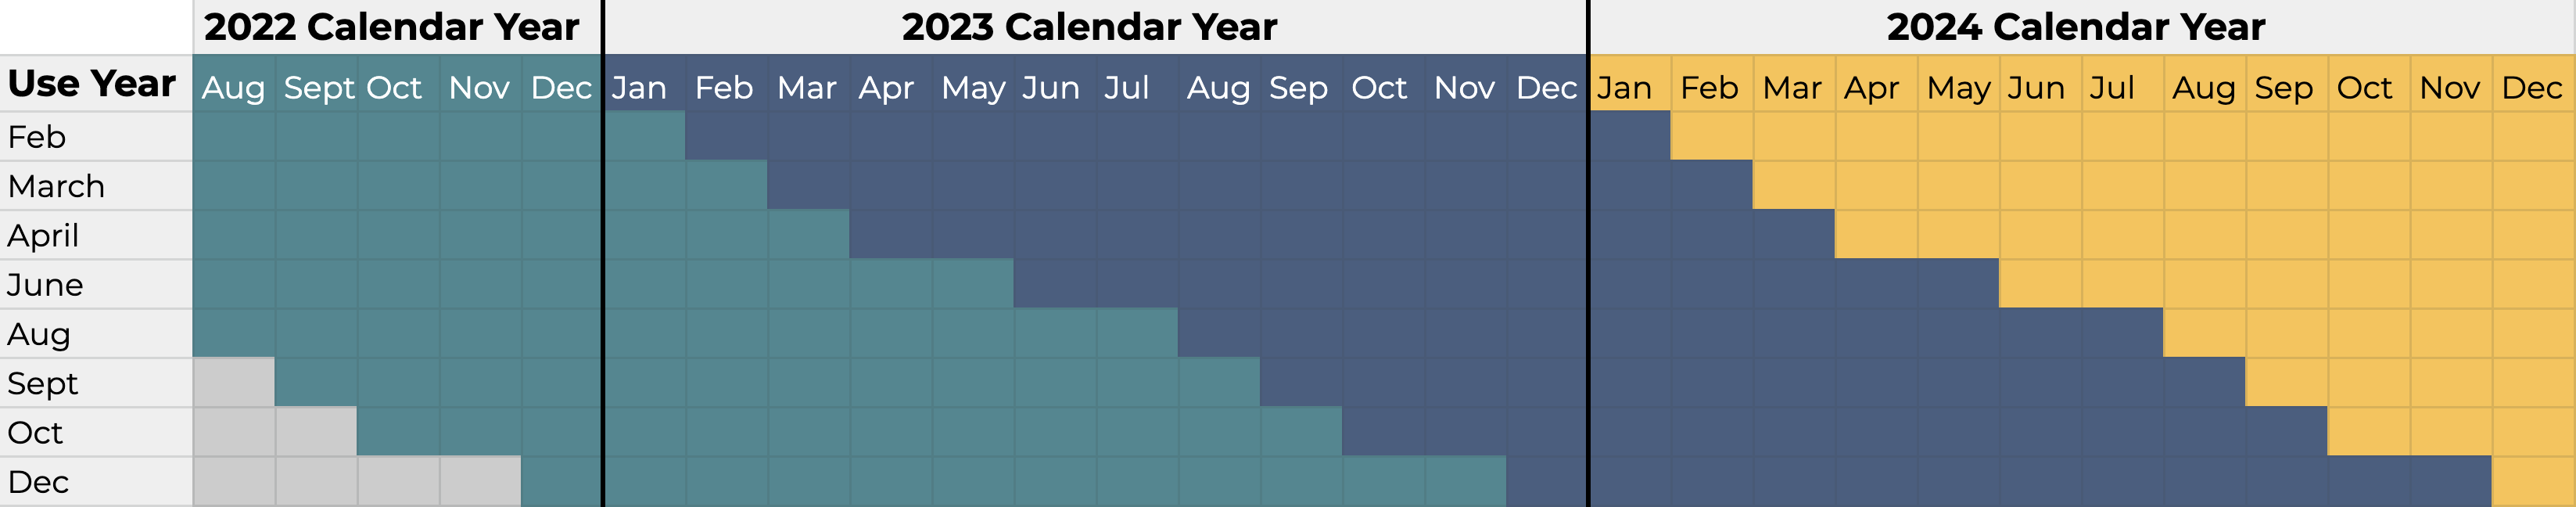 Disney Vacation Club Use Year vs Calendar Year Chart 2022 - 2024